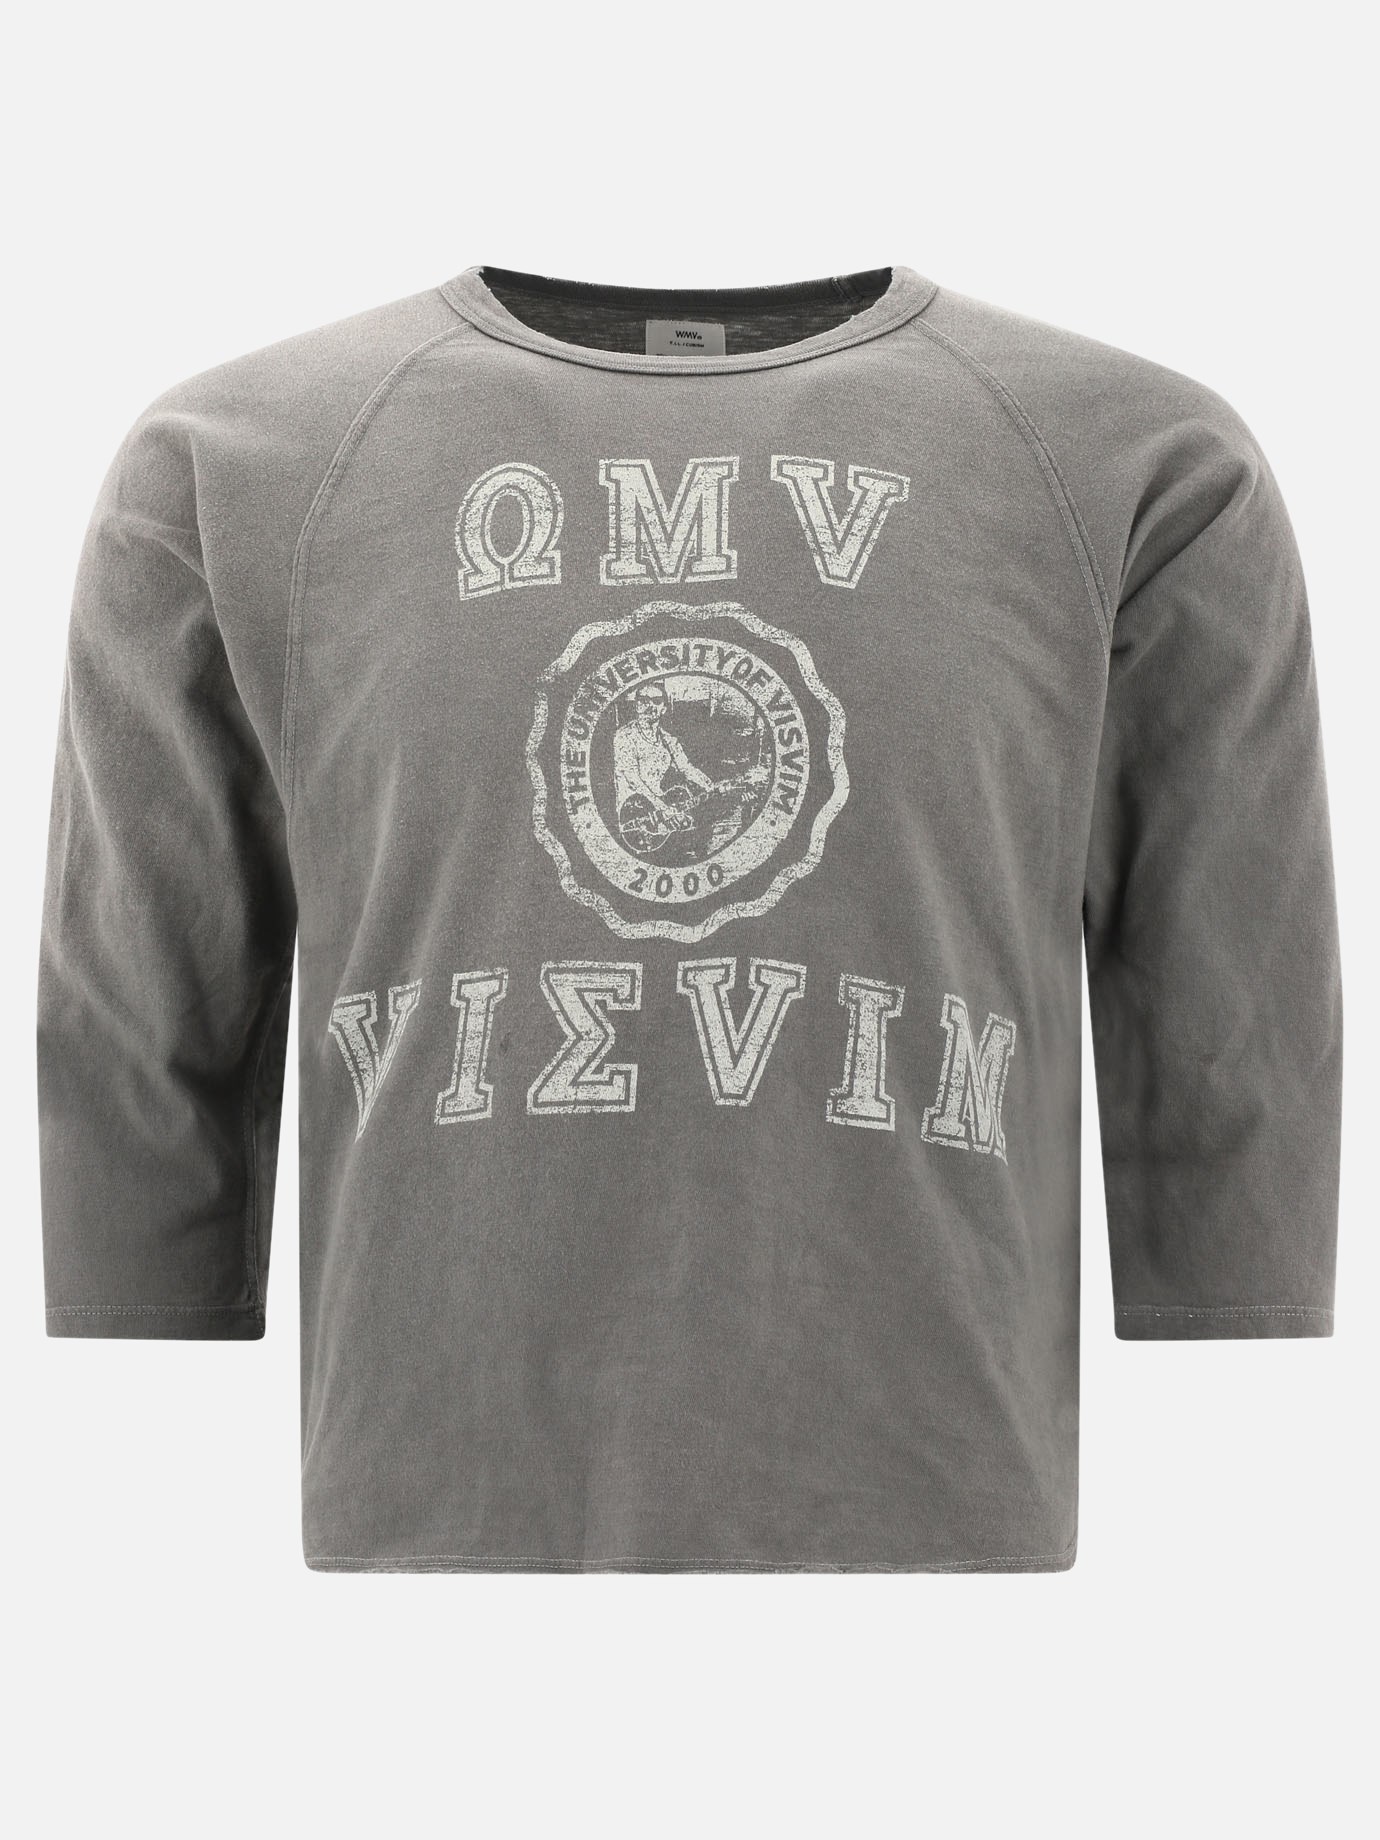  Gridiron  t-shirtby Visvim - 1